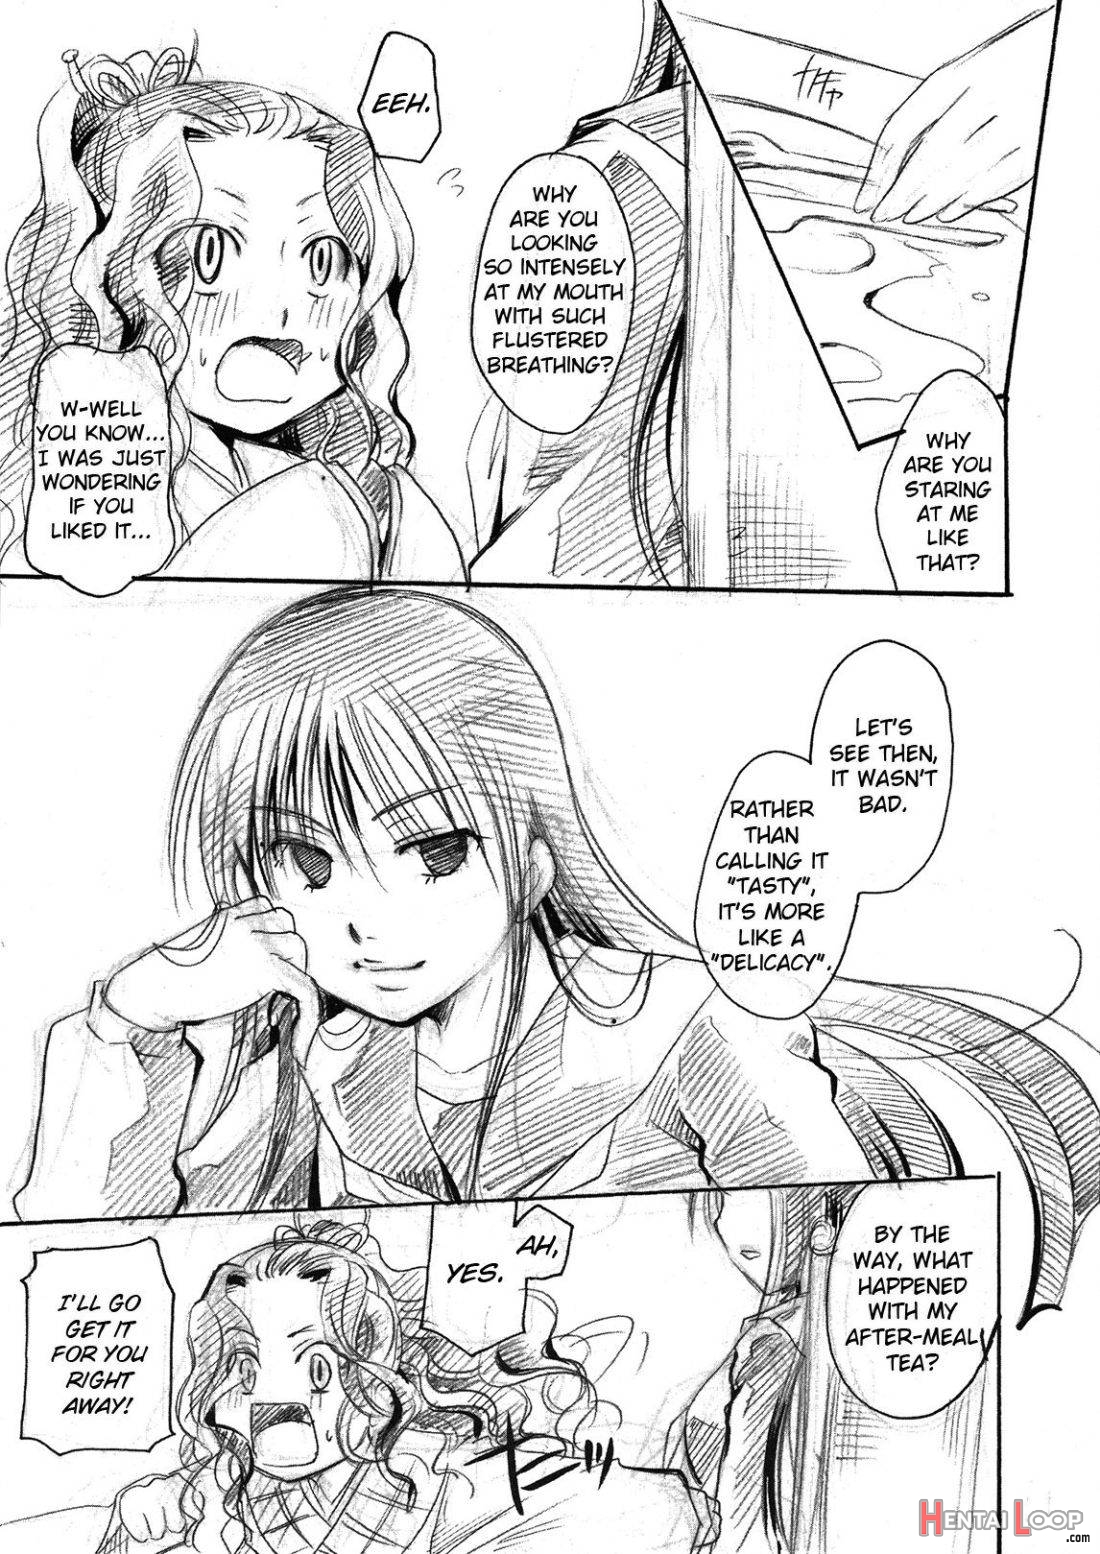 Kitsune-sama’s Dinnertime page 14